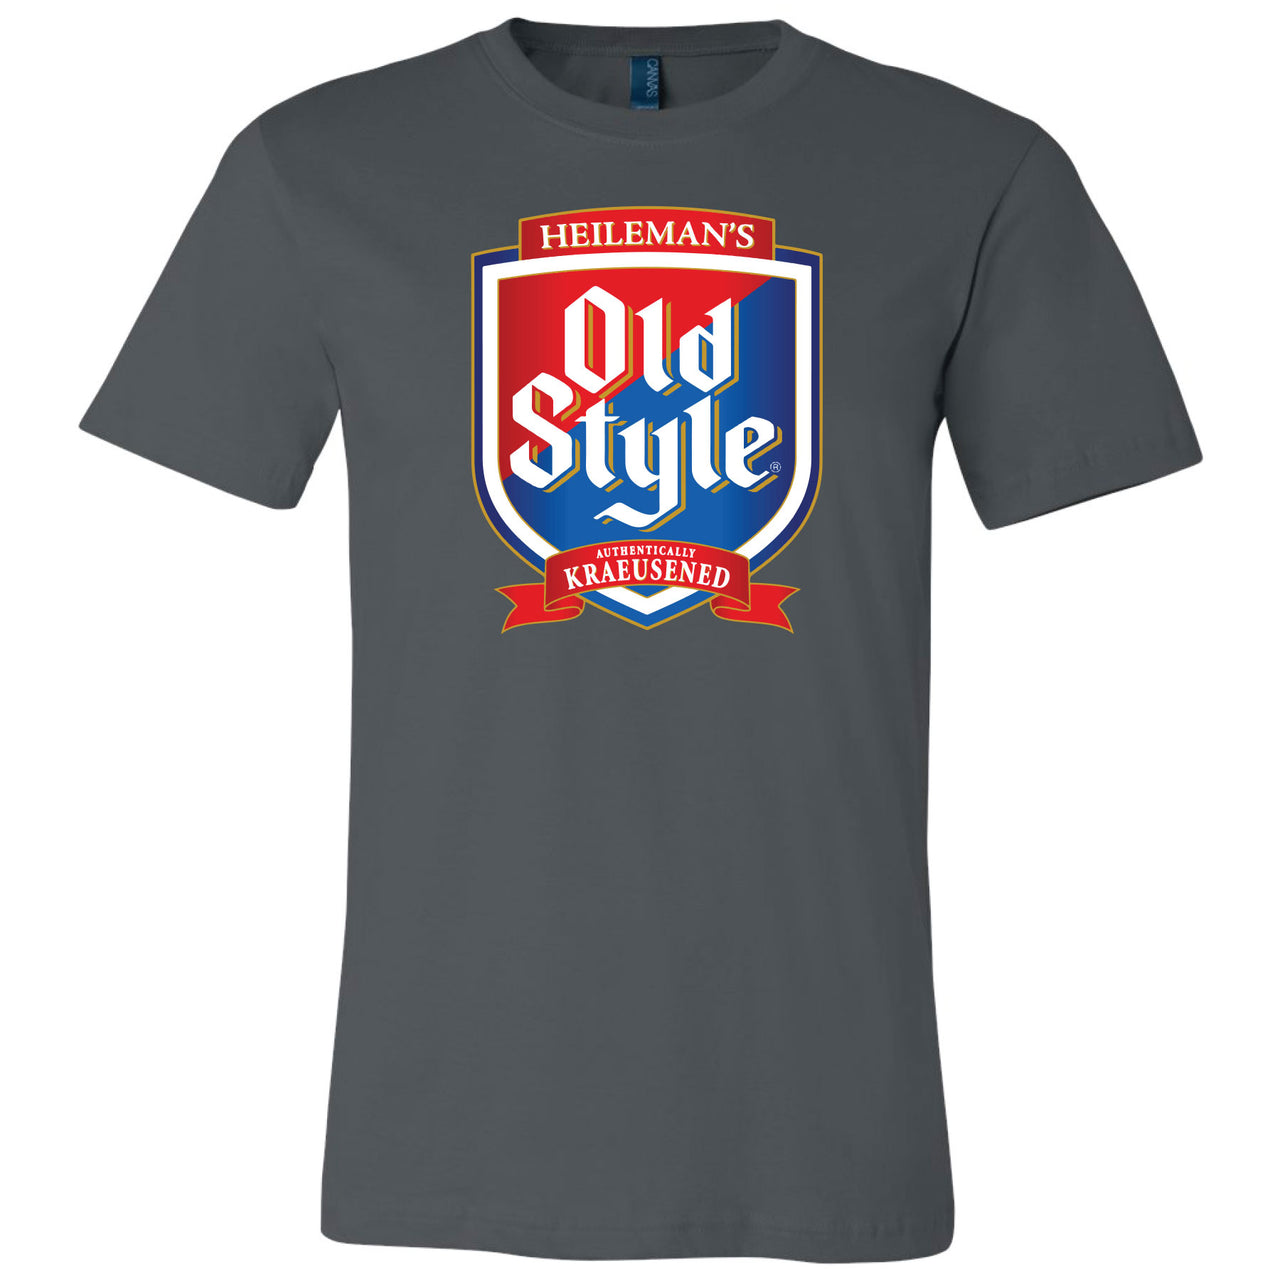 Old Style - Kraeusened Shield Logo T-Shirt